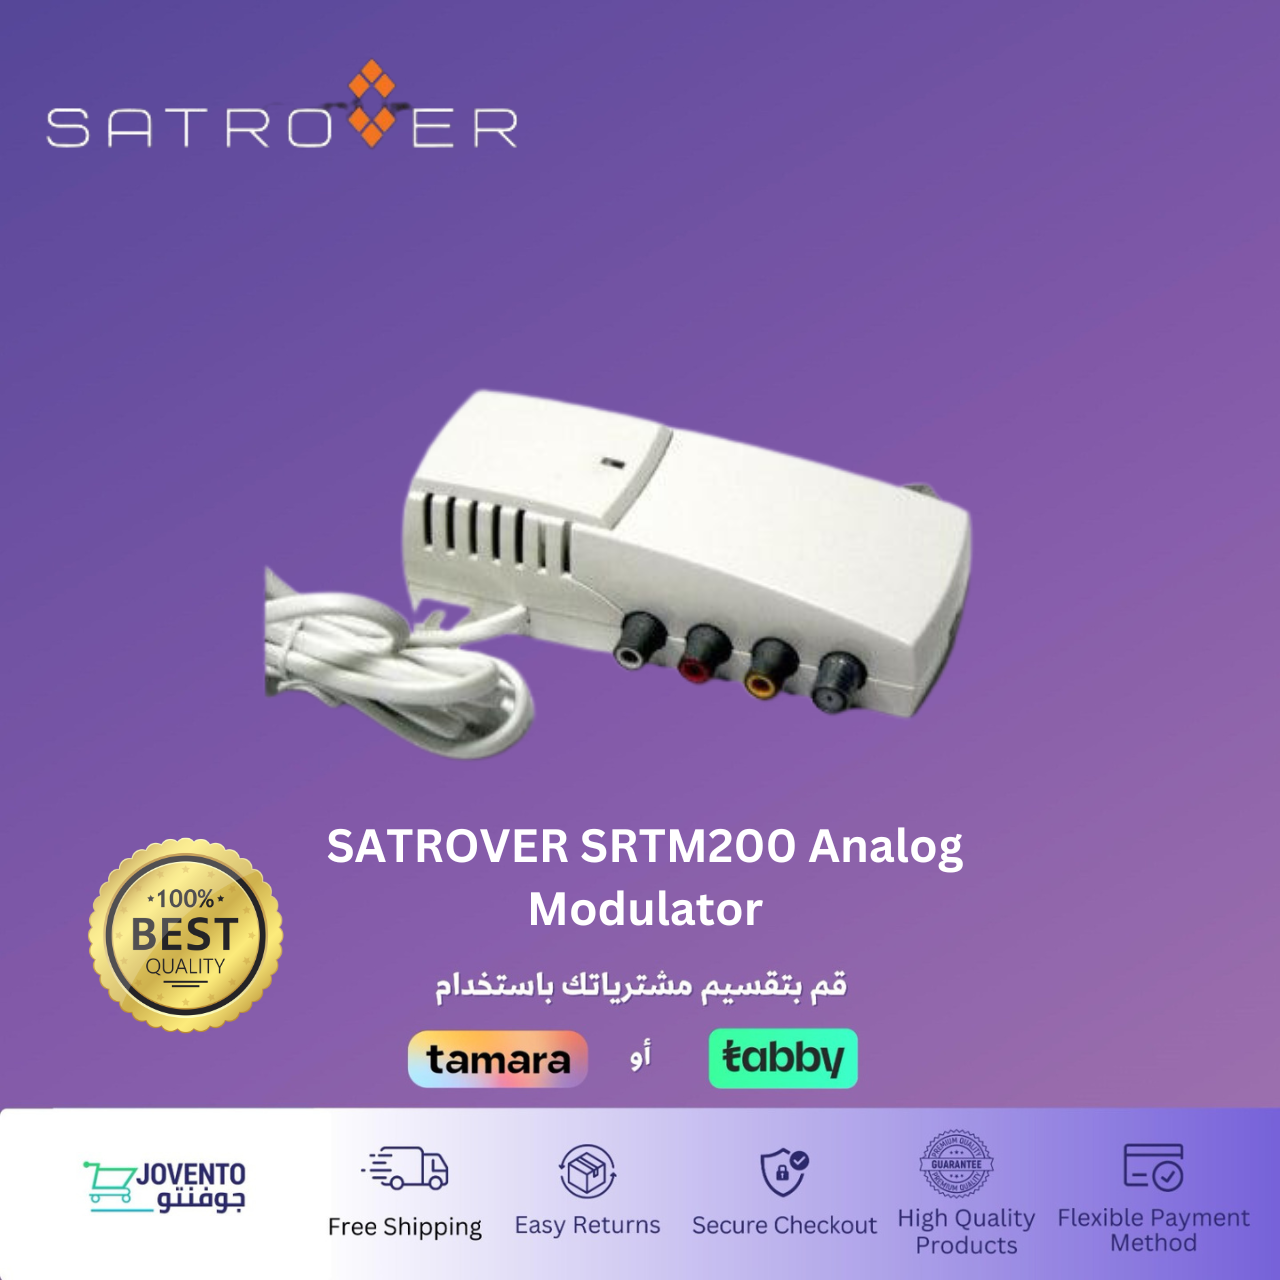 SATROVER SRTM200 Analog Modulator